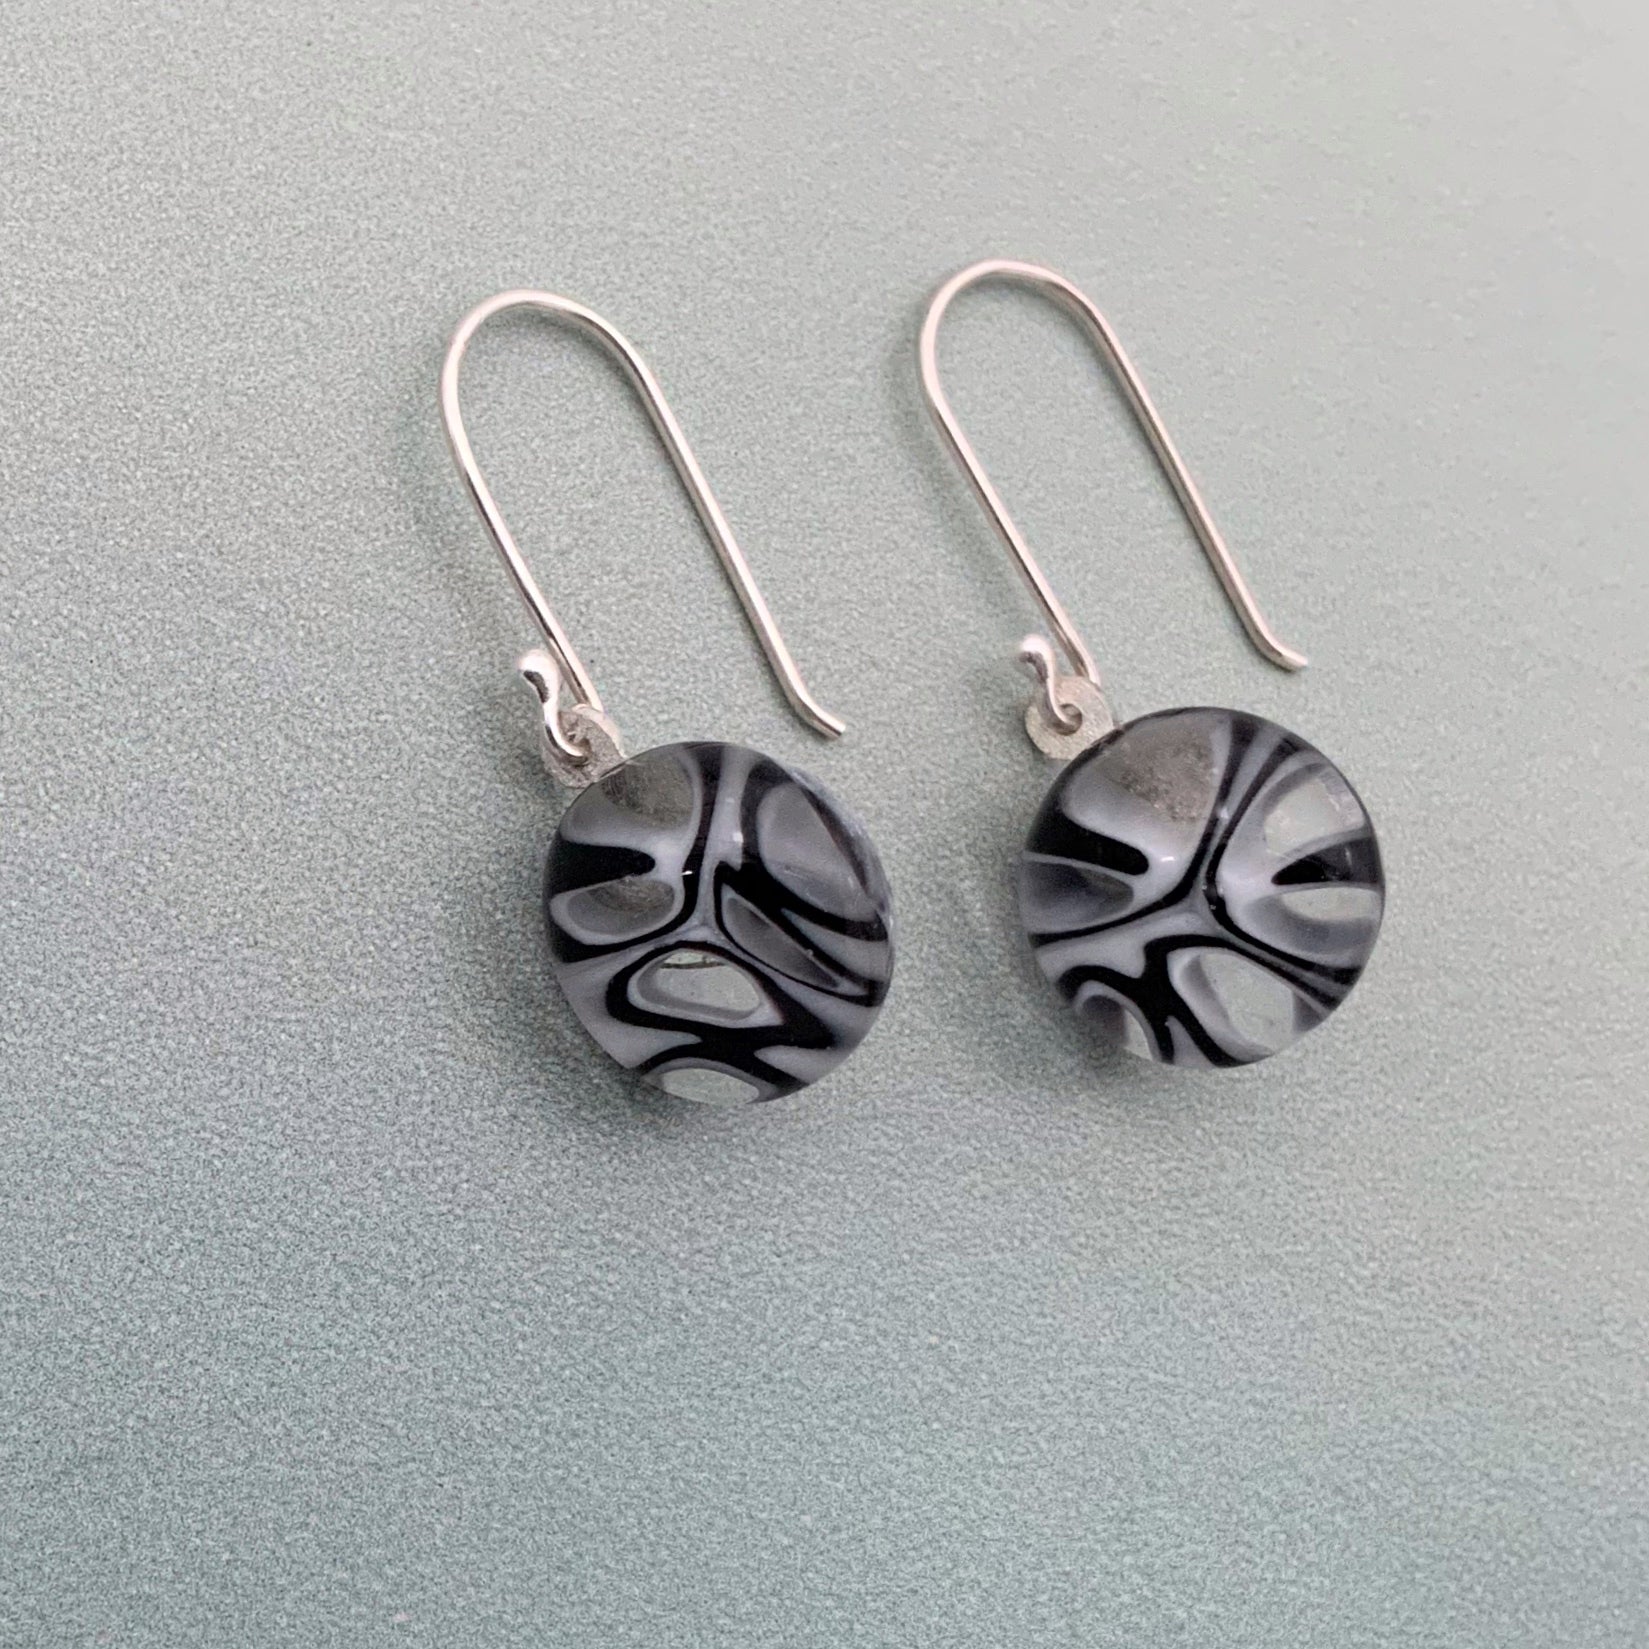 Murrini black and white glass dangle earrings